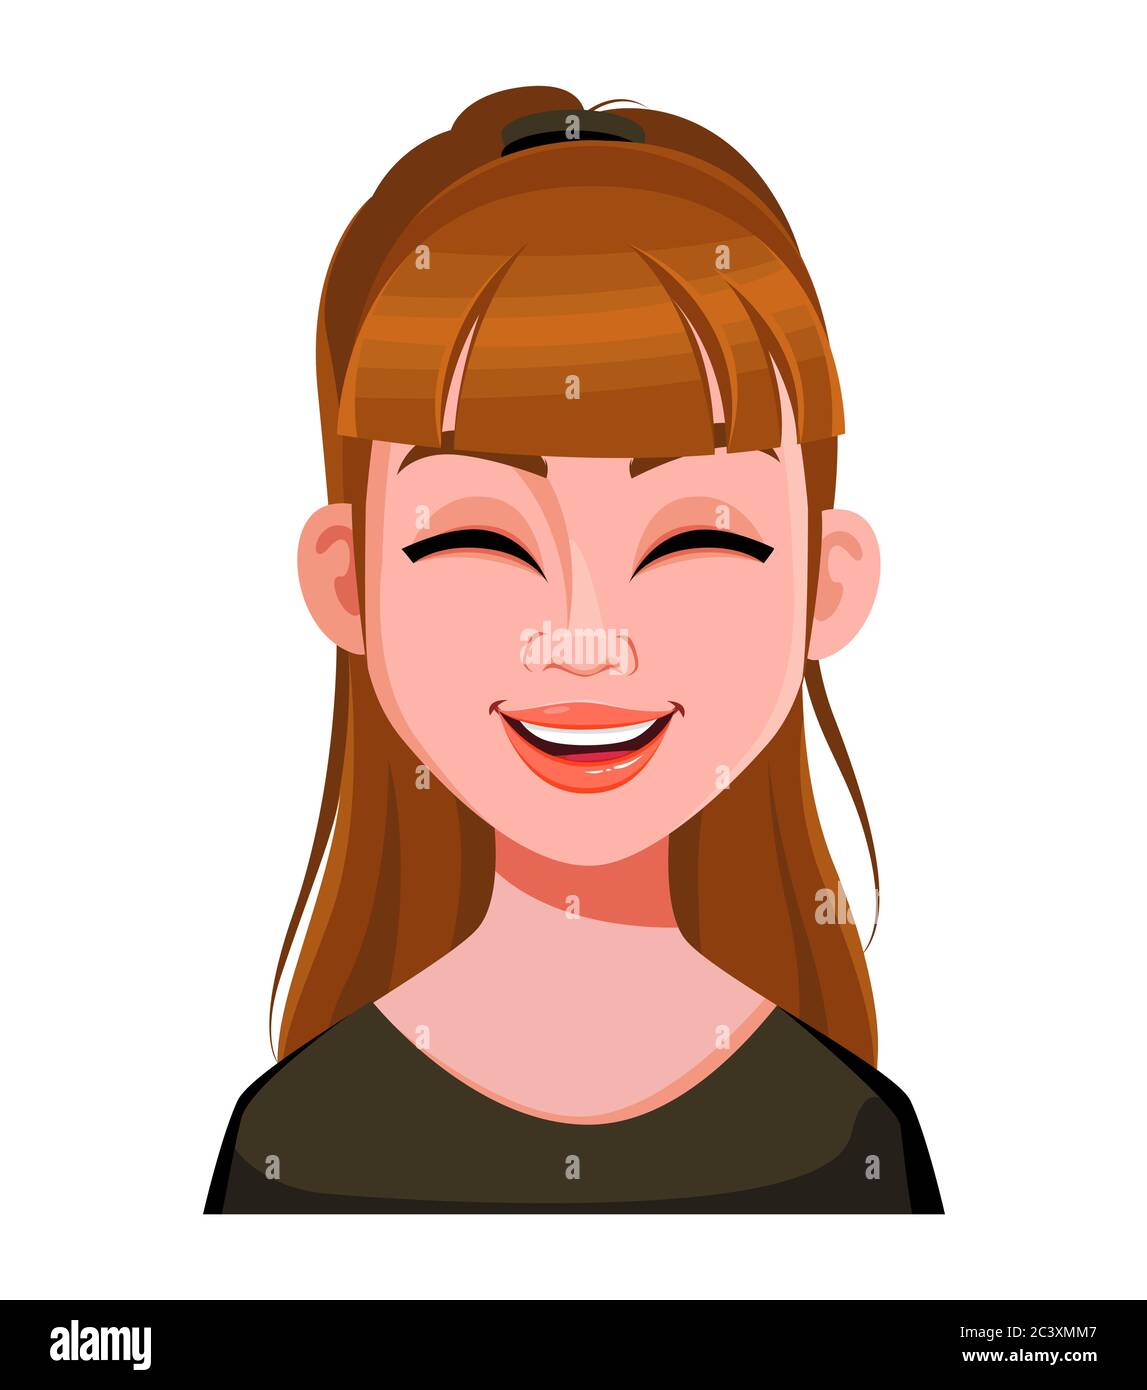 happy face girl cartoon